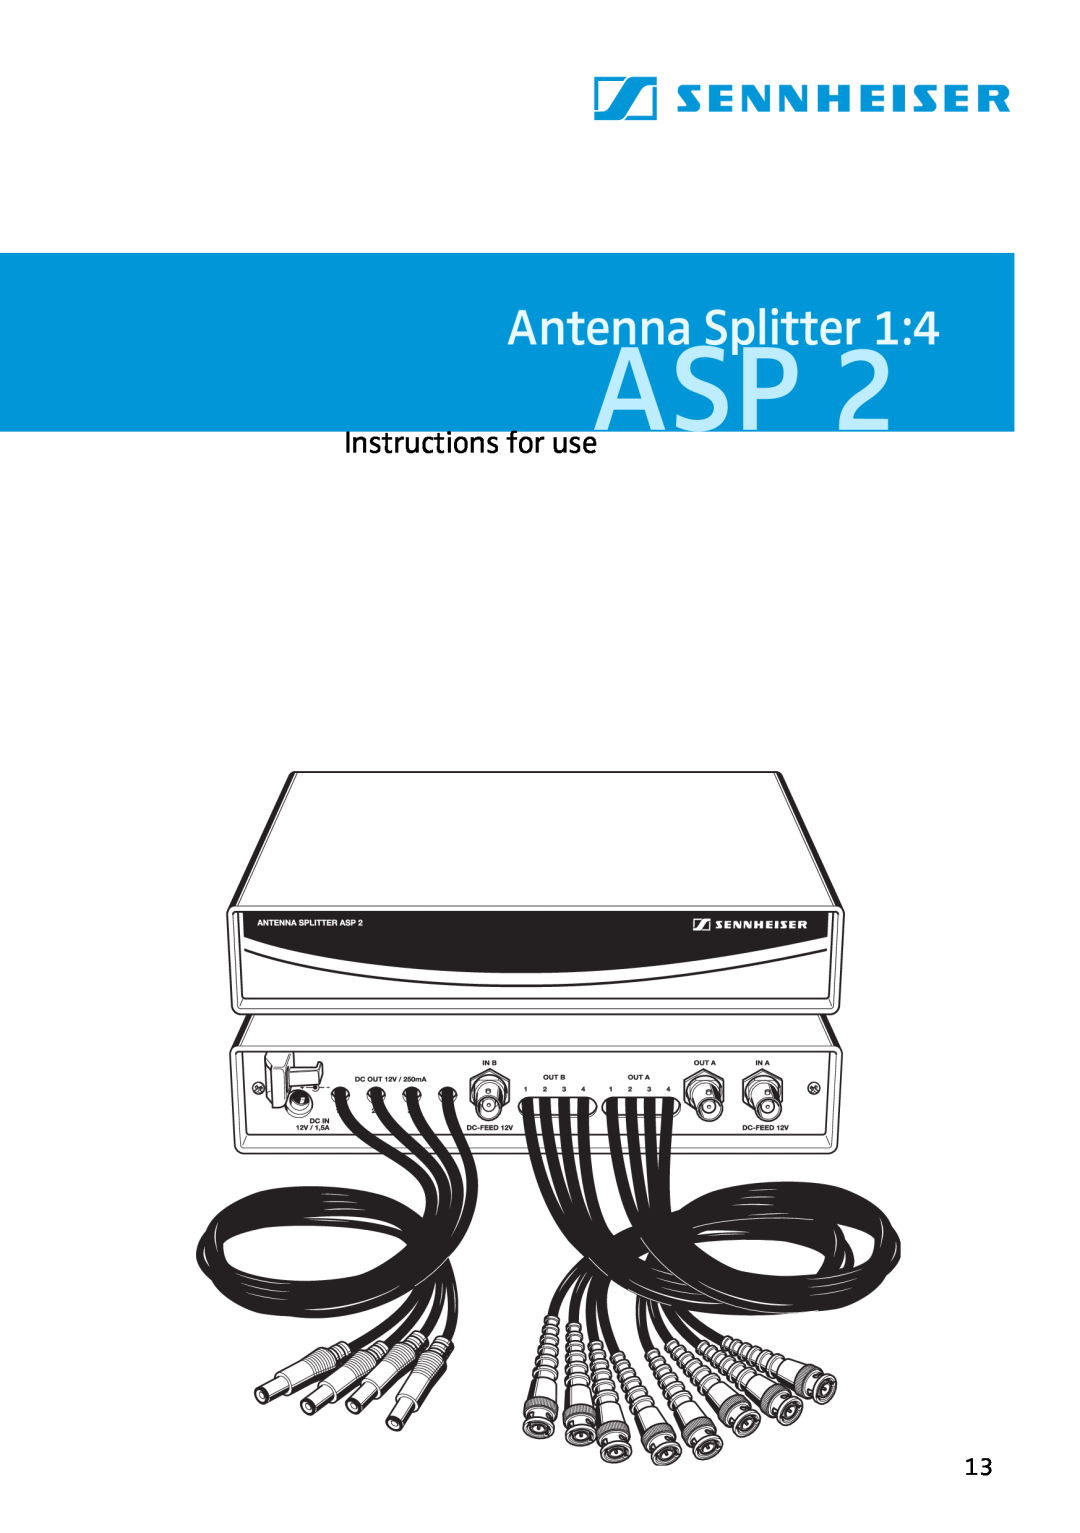 Sennheiser ASP 2 manual Antenna Splitter, Bedienungsanleitung 